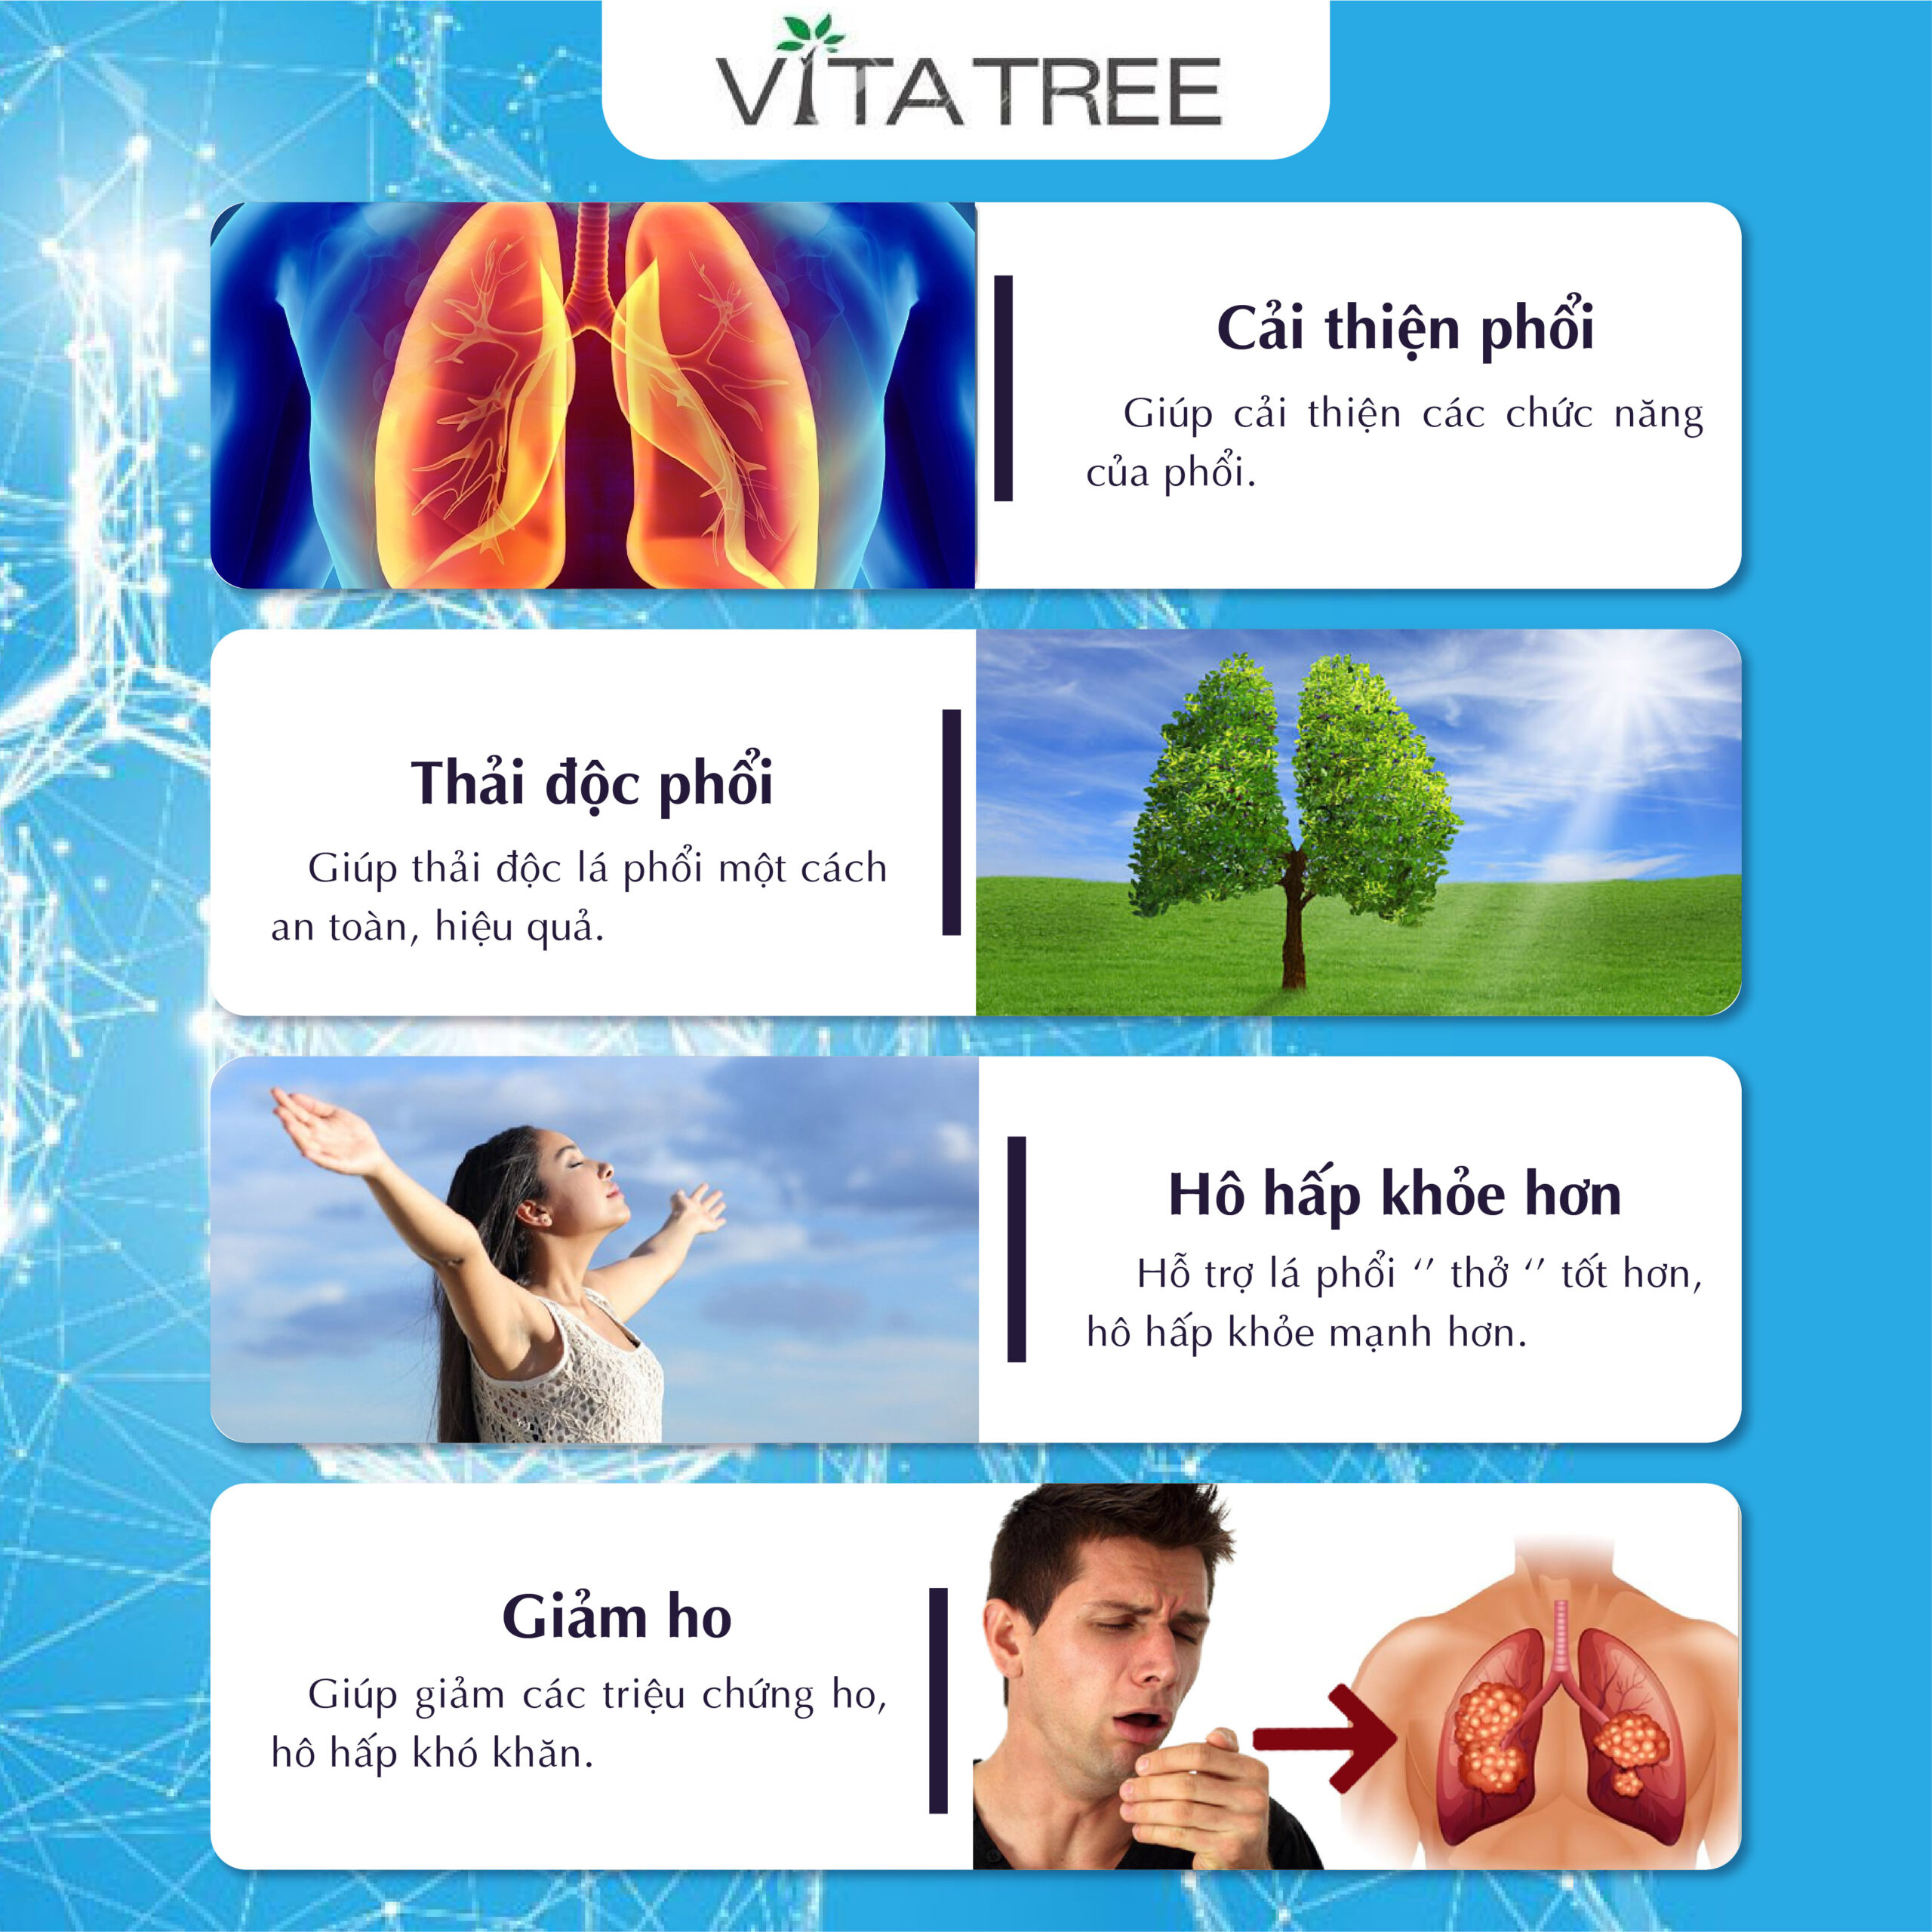 Thai doc phoi Vitatree Lung Detox2 scaled